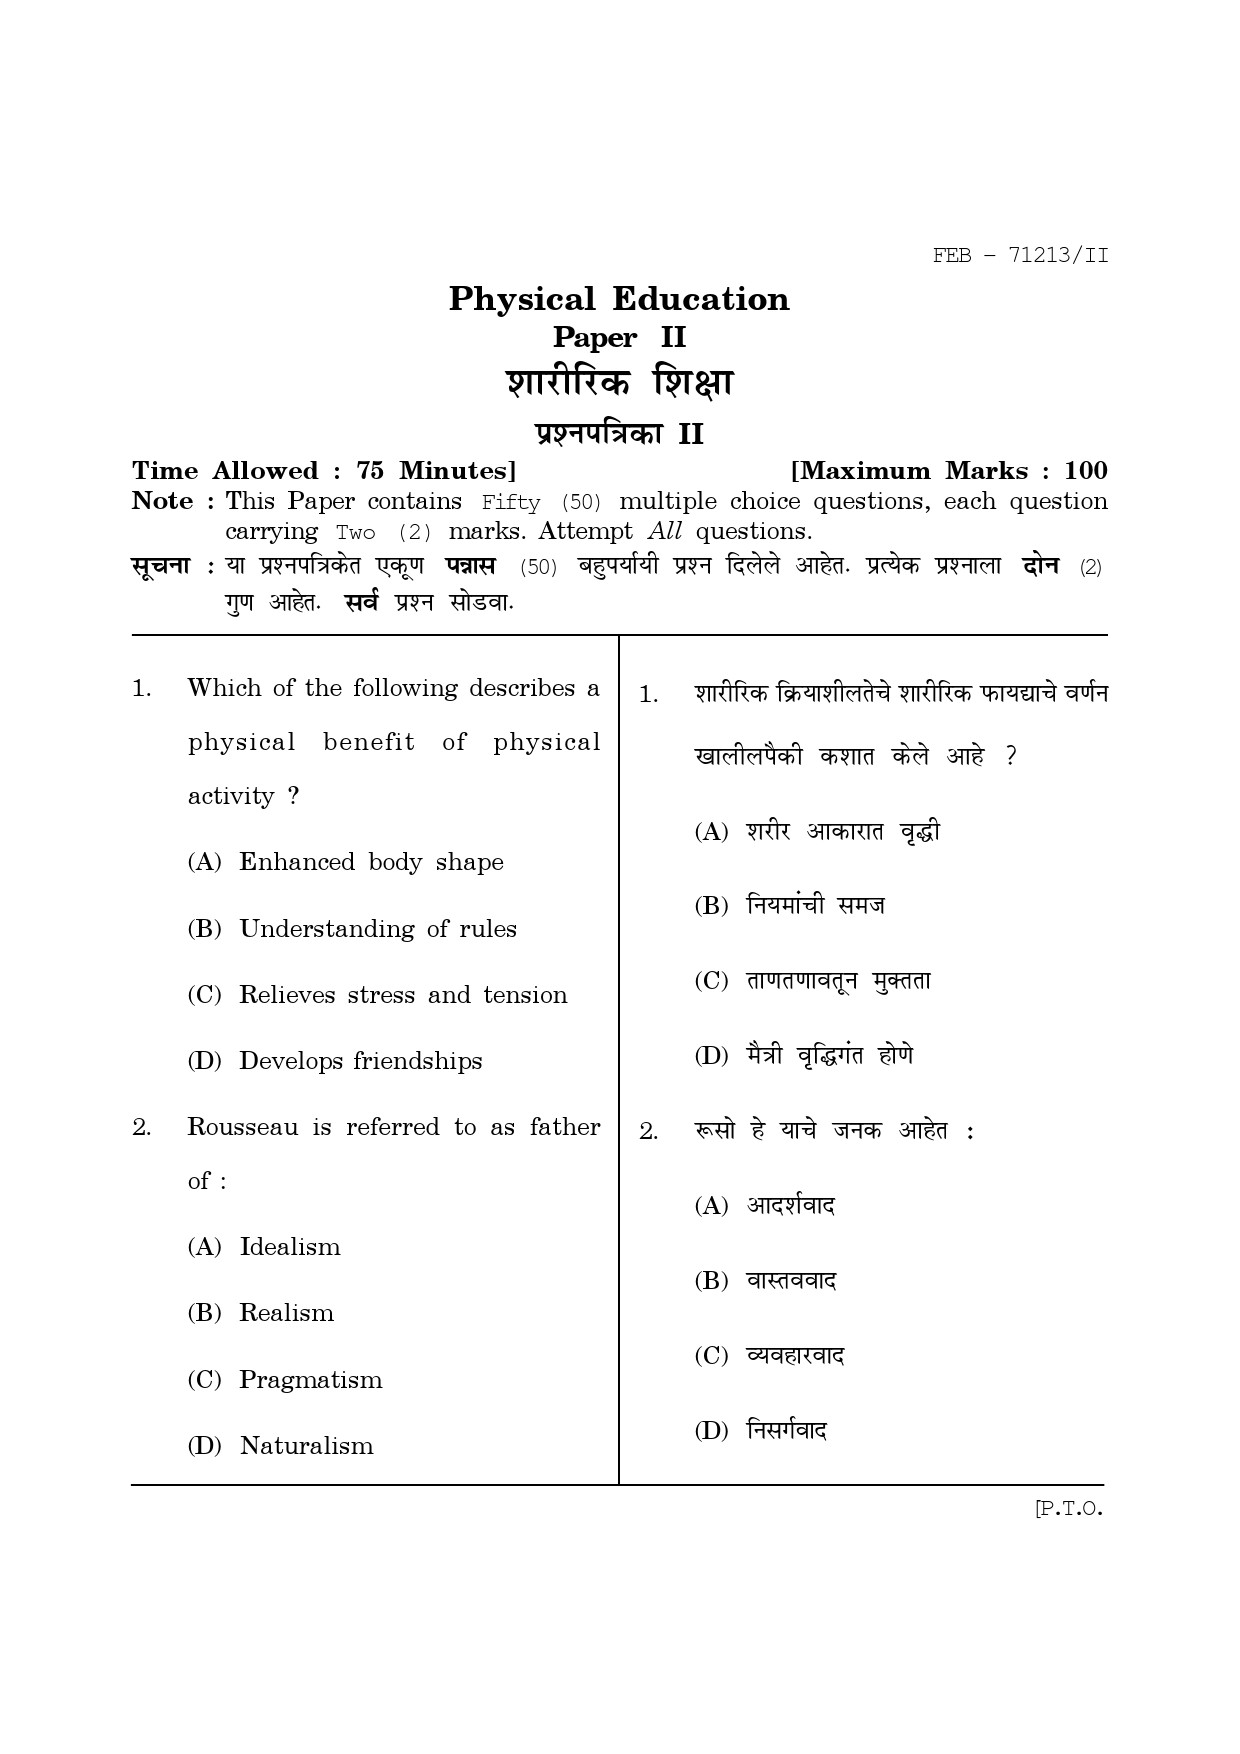 Maharashtra SET Physical Education Question Paper II February 2013 1